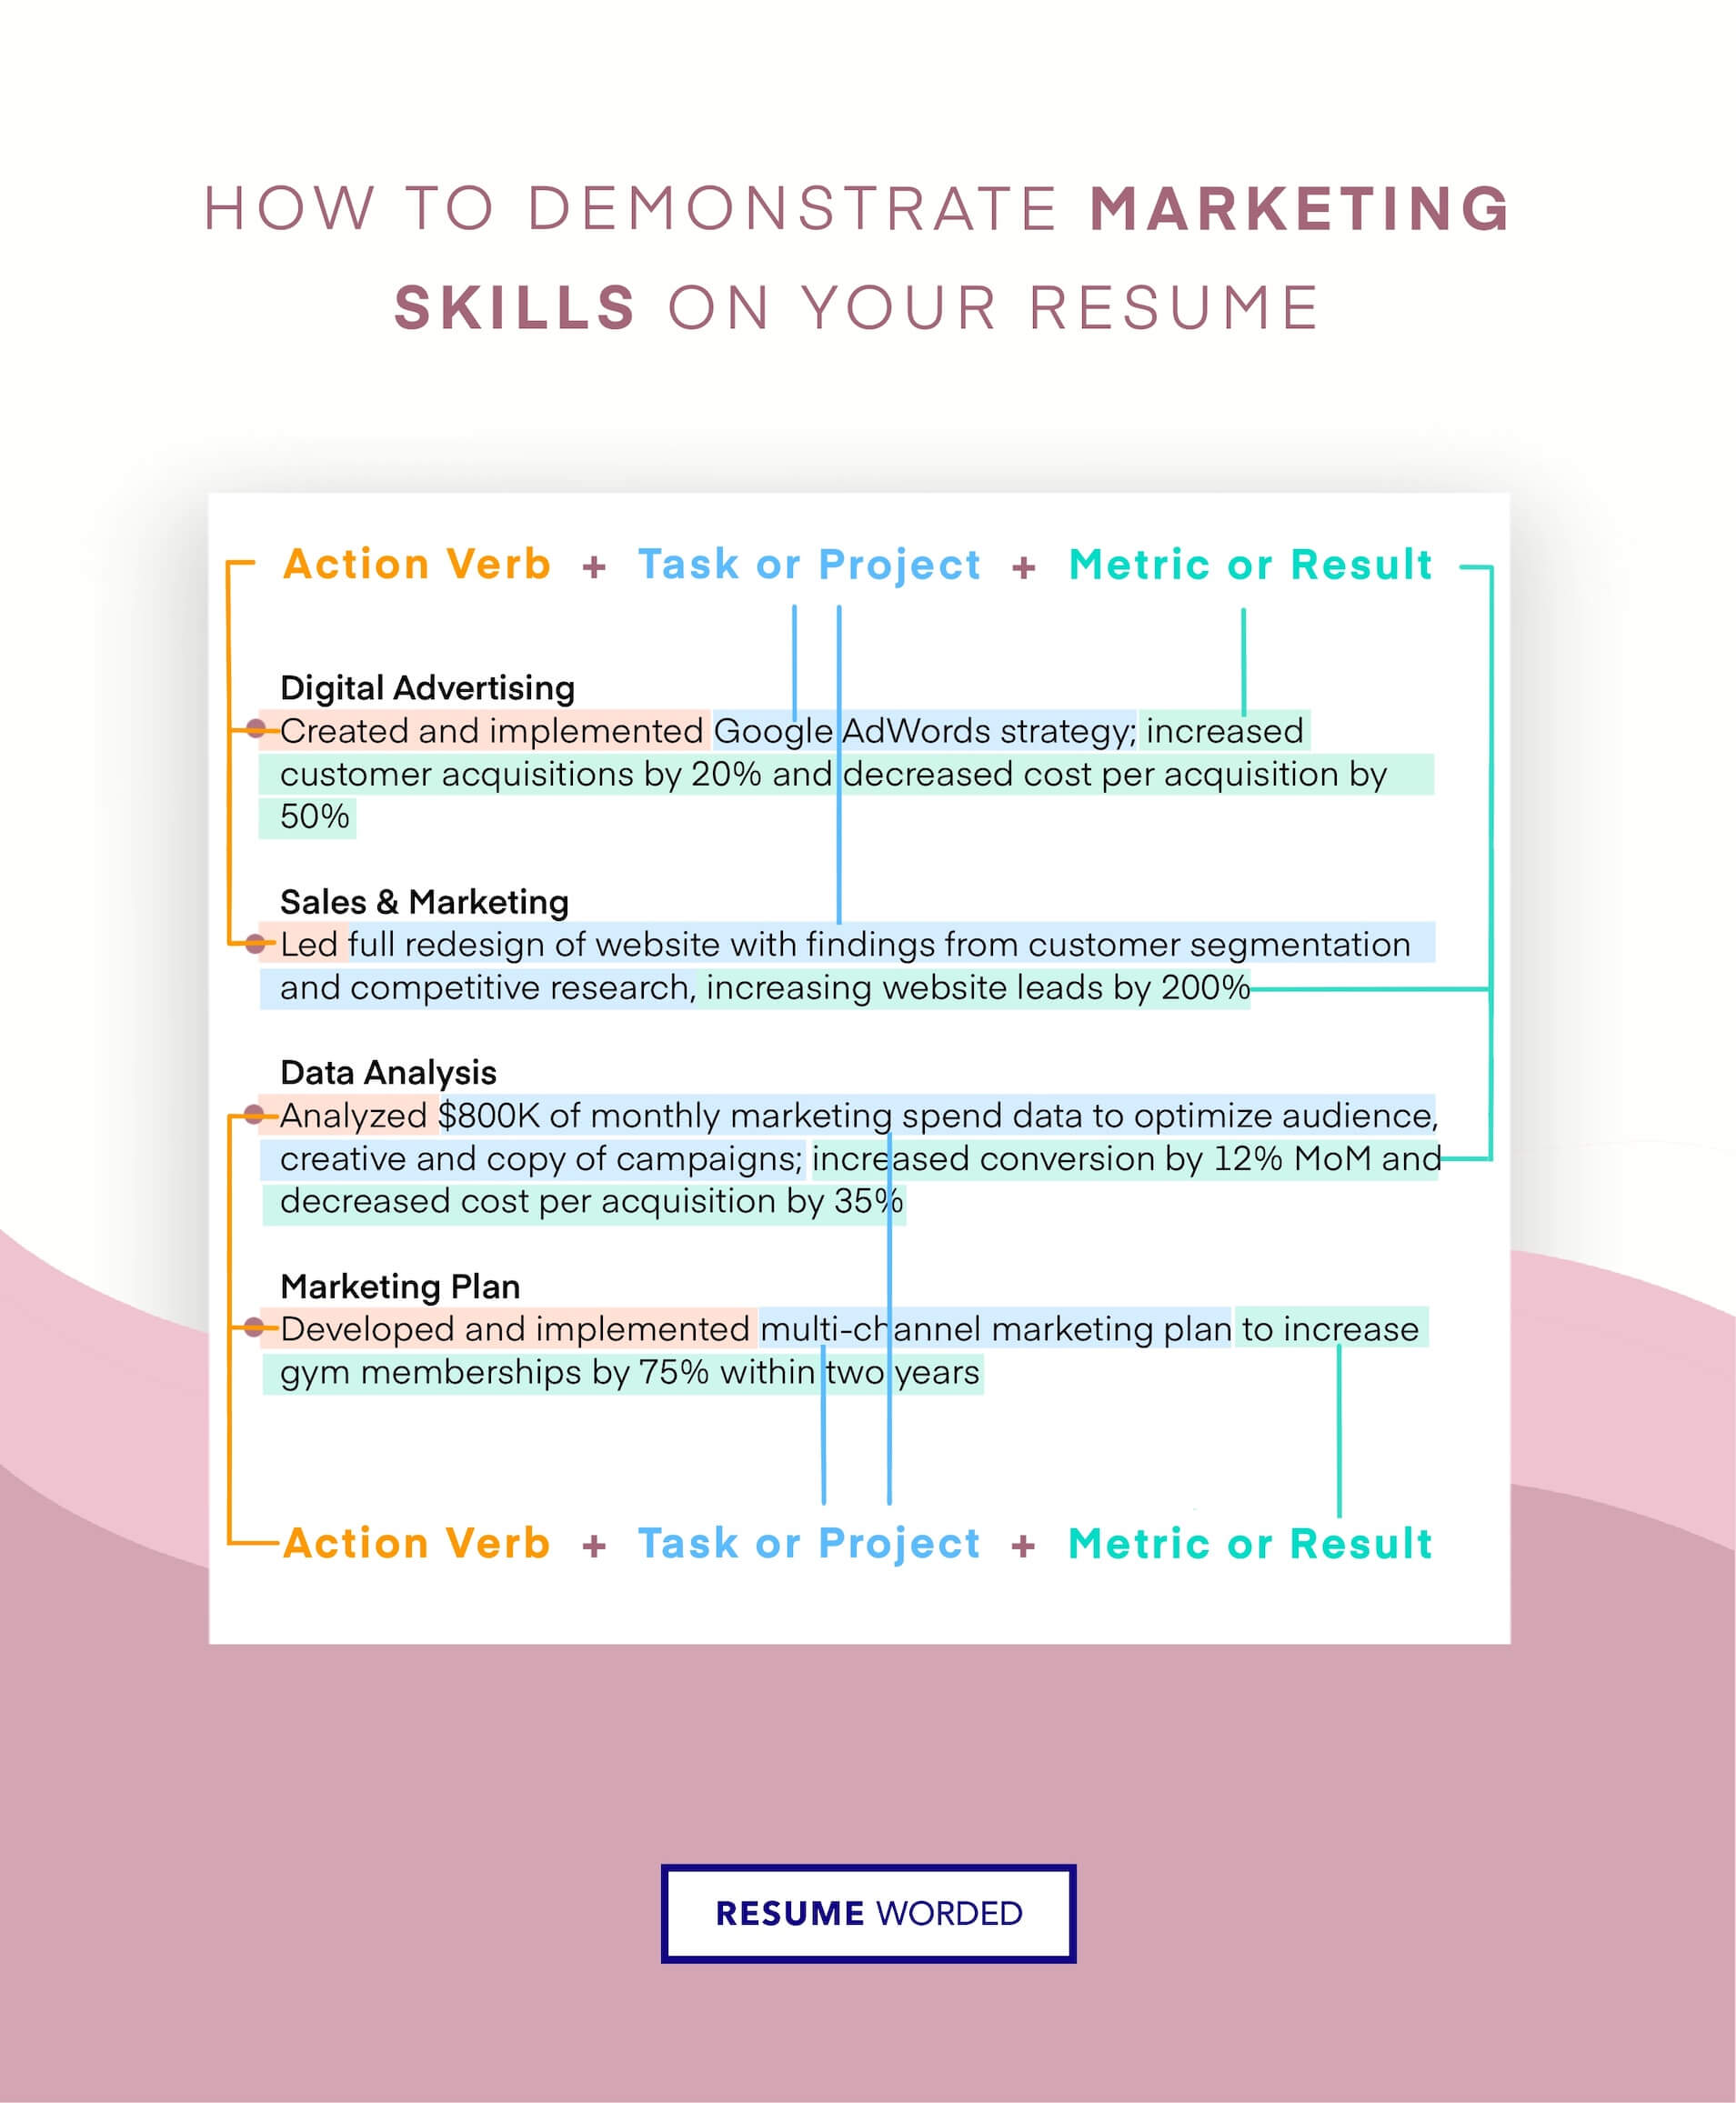 Consider enhancing your digital marketing knowledge as a director of marketing -  Director of Marketing Resume